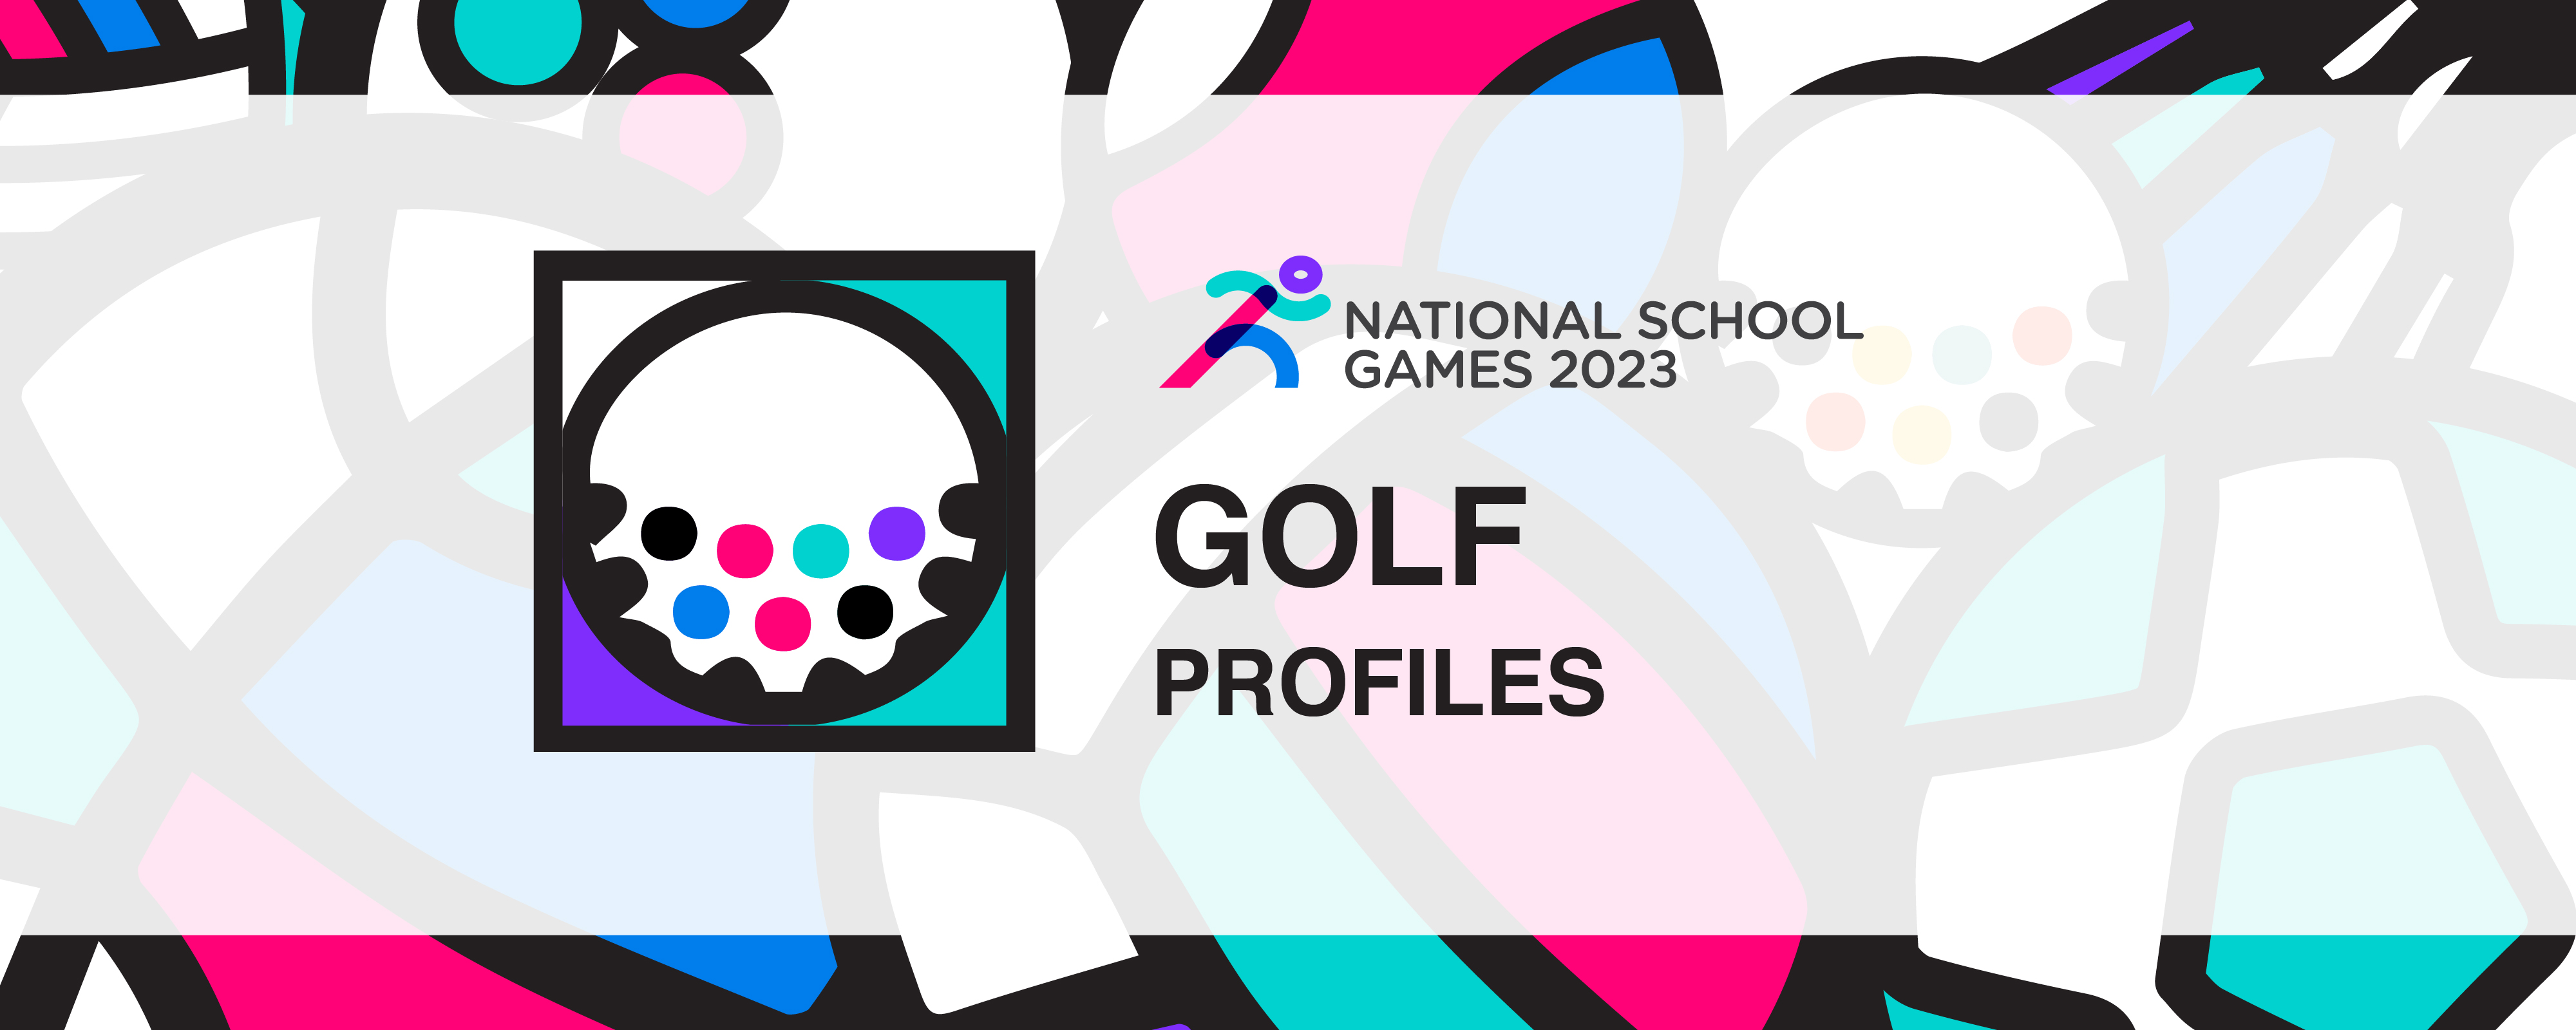 National School Games 2023 | Golf | Profiles